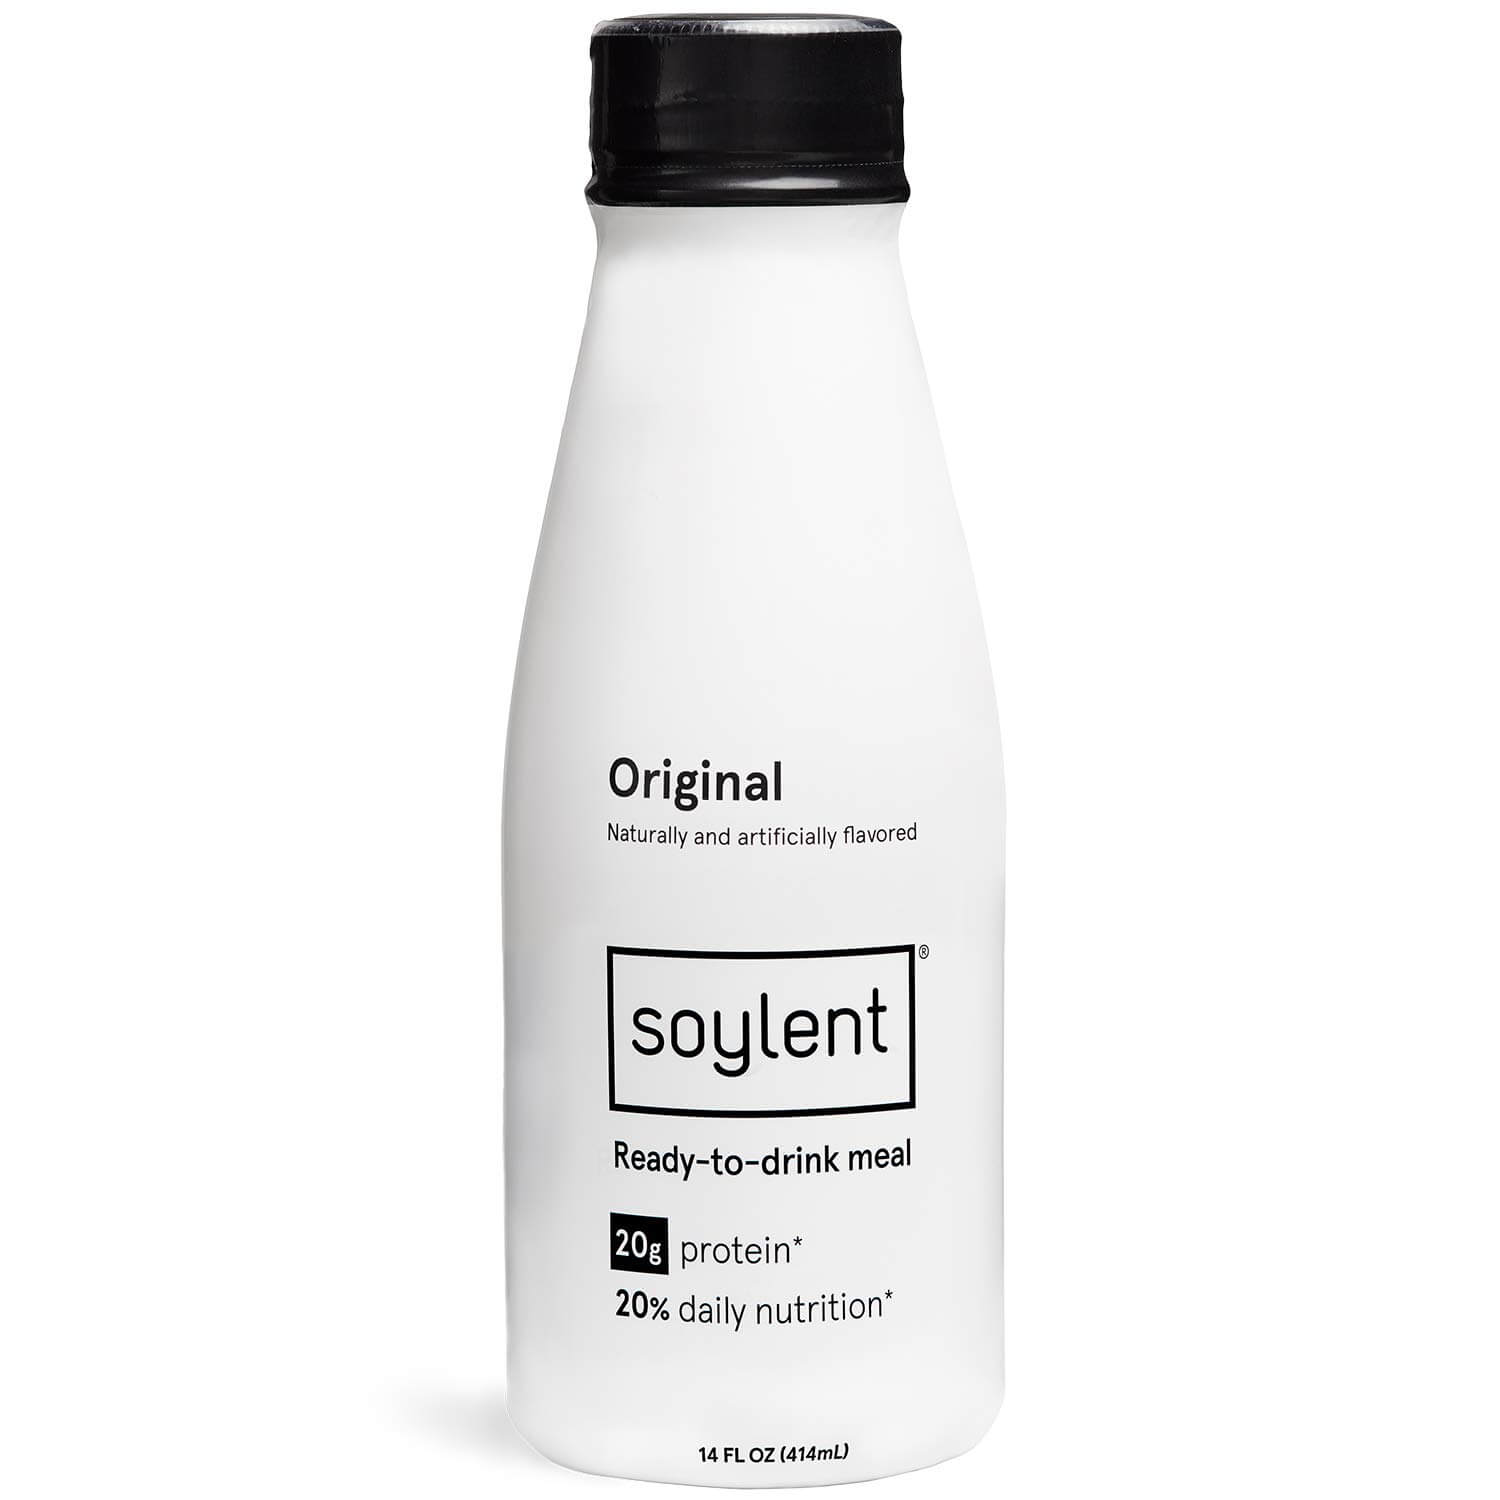 Soylent Original flavor Meal Replacement